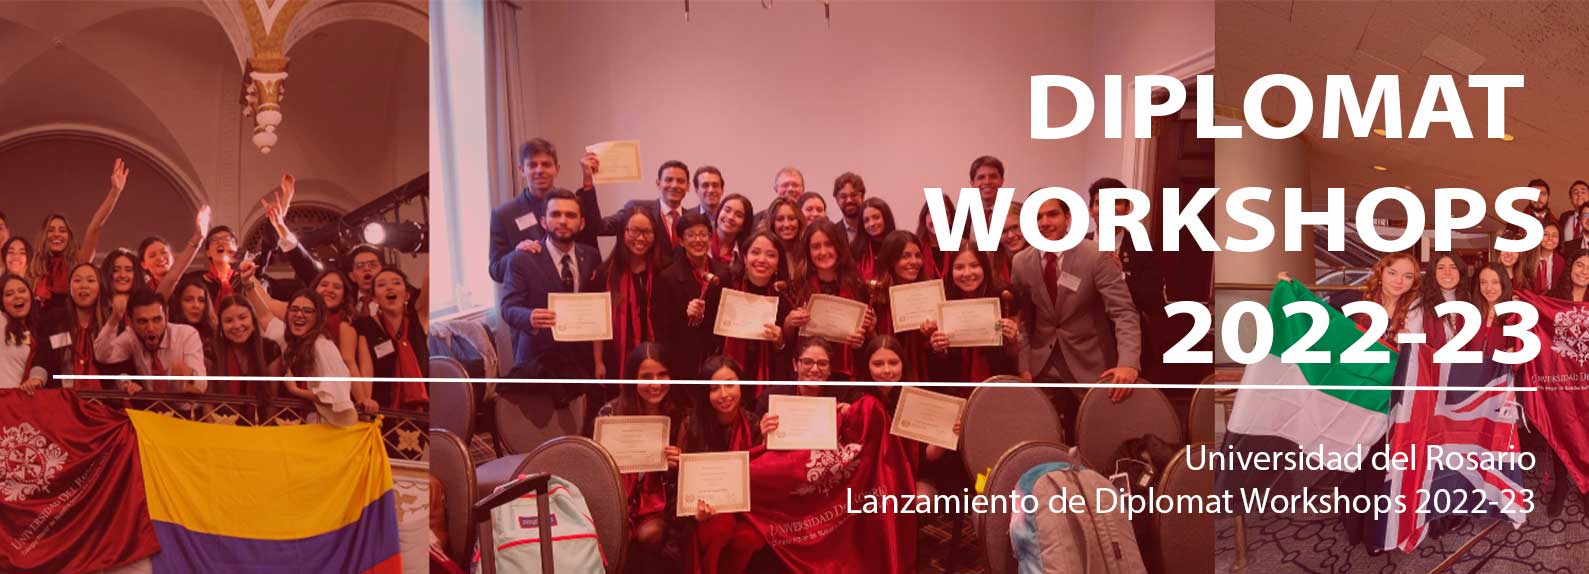 Banner UR Diplomats Workshops 2022-23 